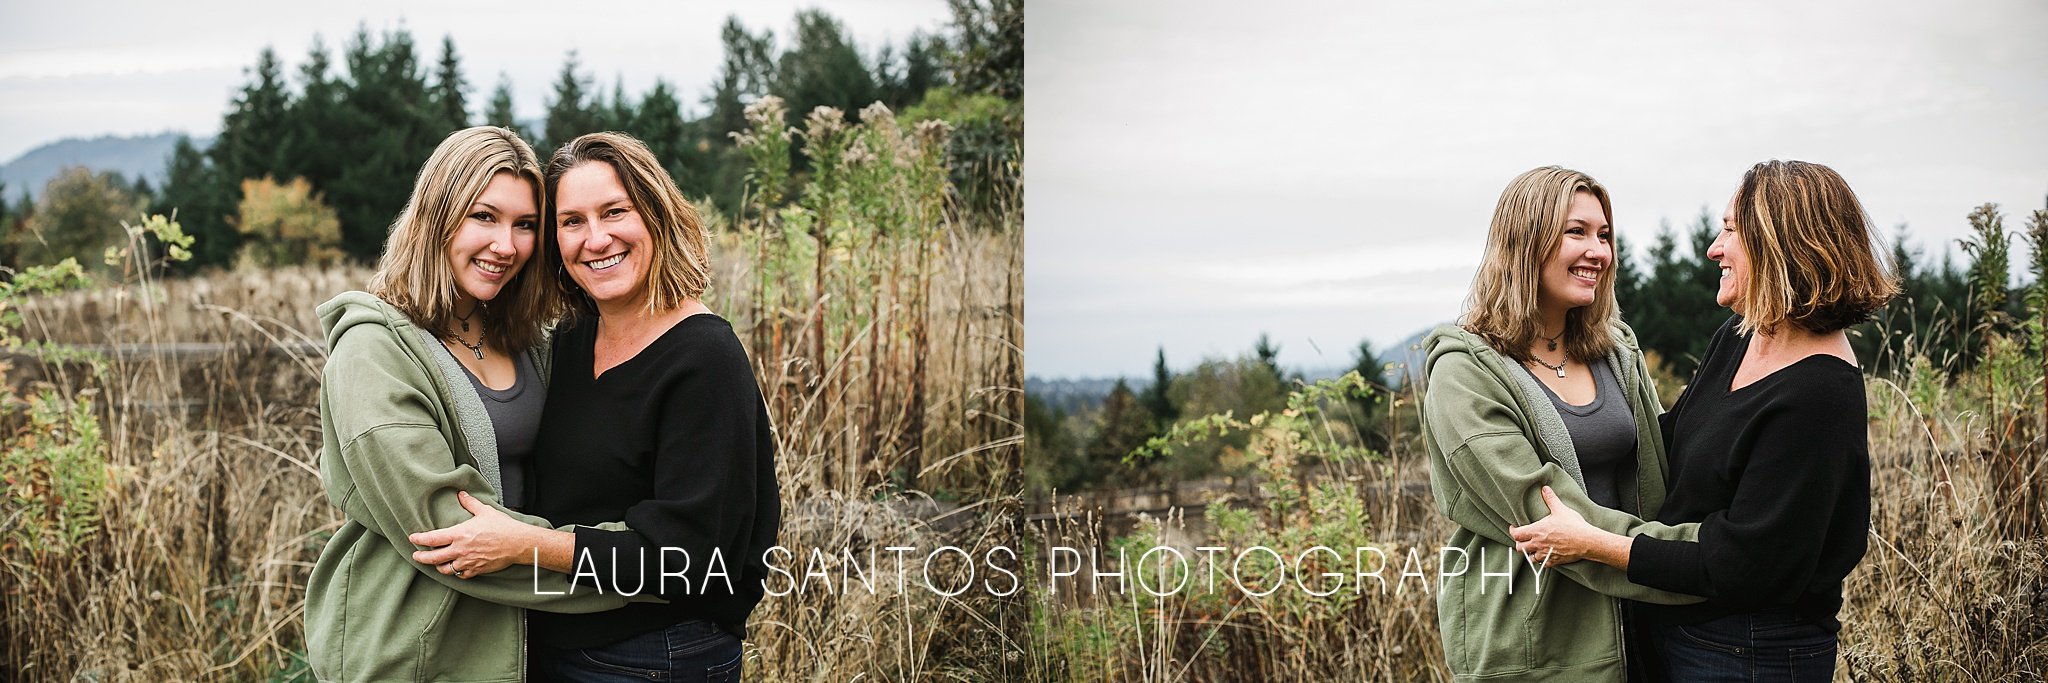 Laura Santos Photography Portland Oregon Family Photographer_4022.jpg